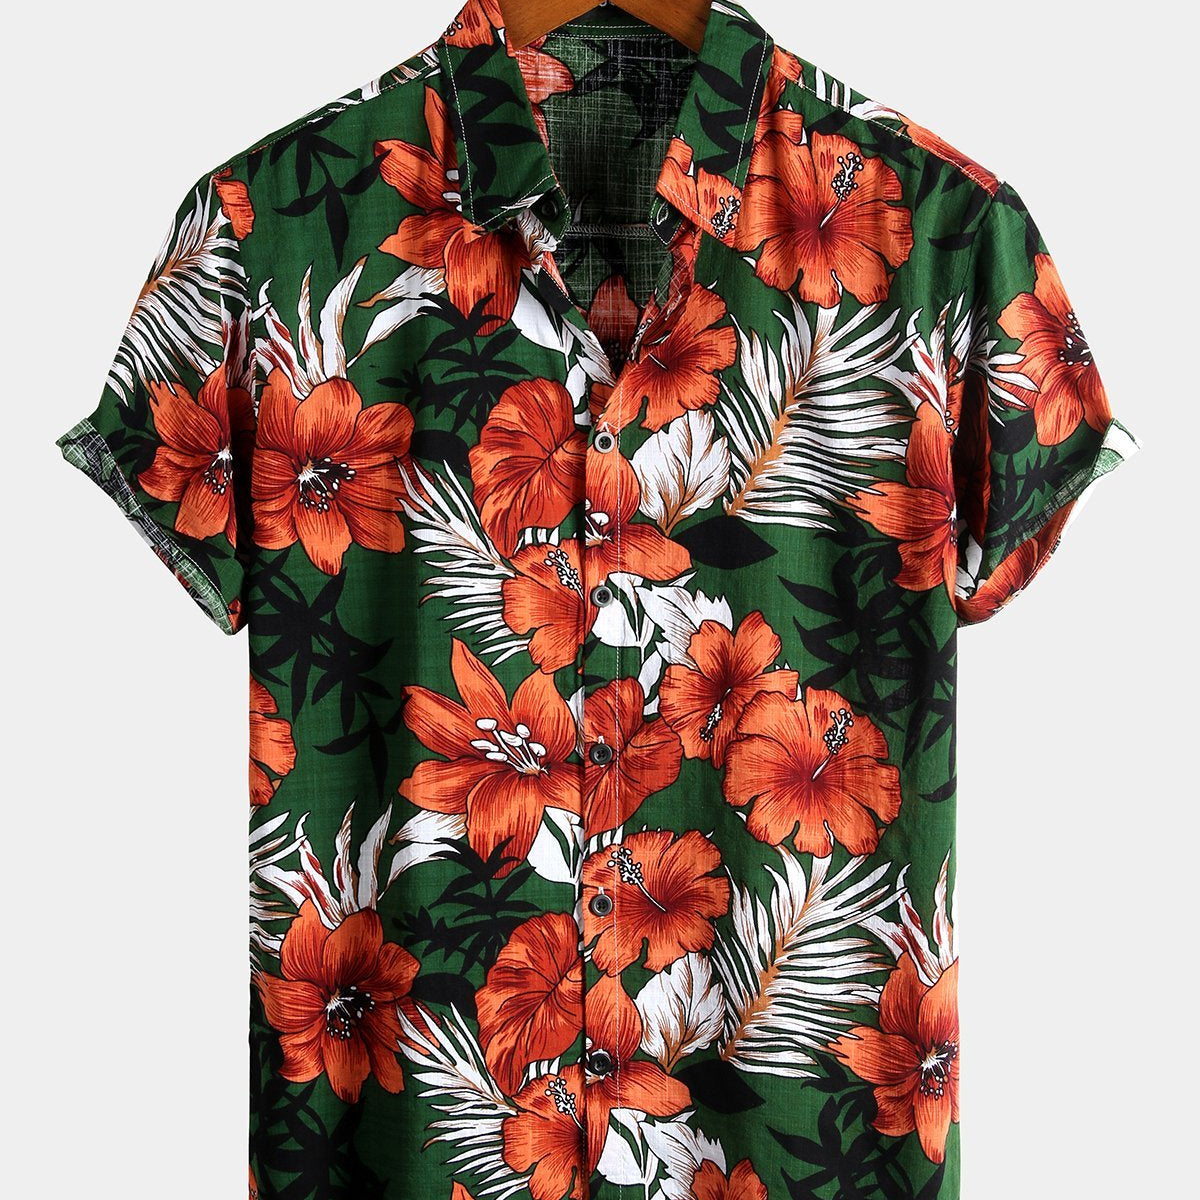 Men's Hawaiian Tropical Plant Floral Print Cotton Short Sleeve Shirts